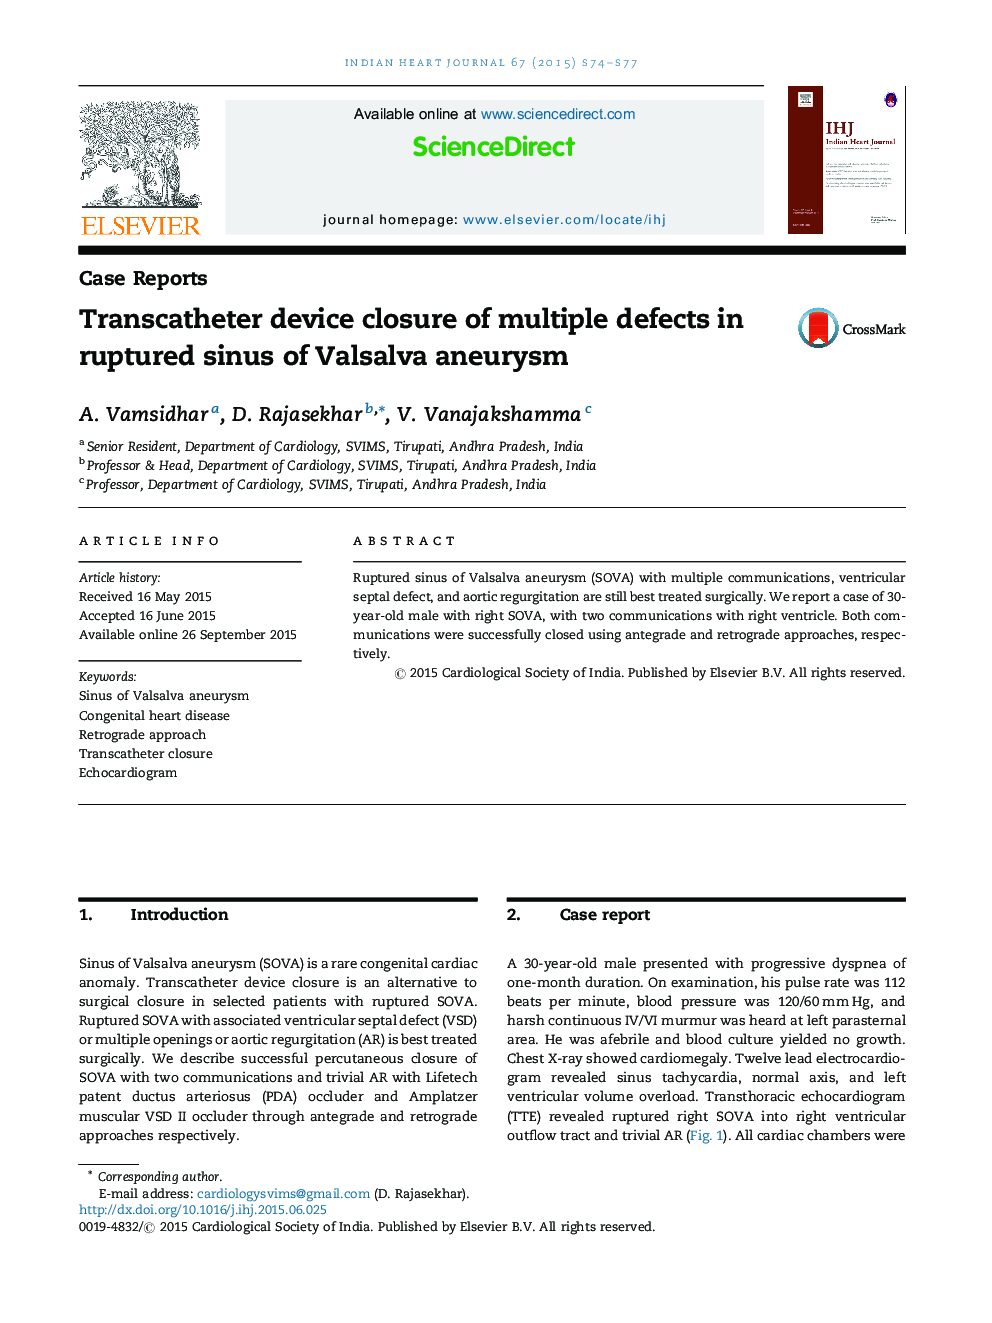 Transcatheter device closure of multiple defects in ruptured sinus of Valsalva aneurysm